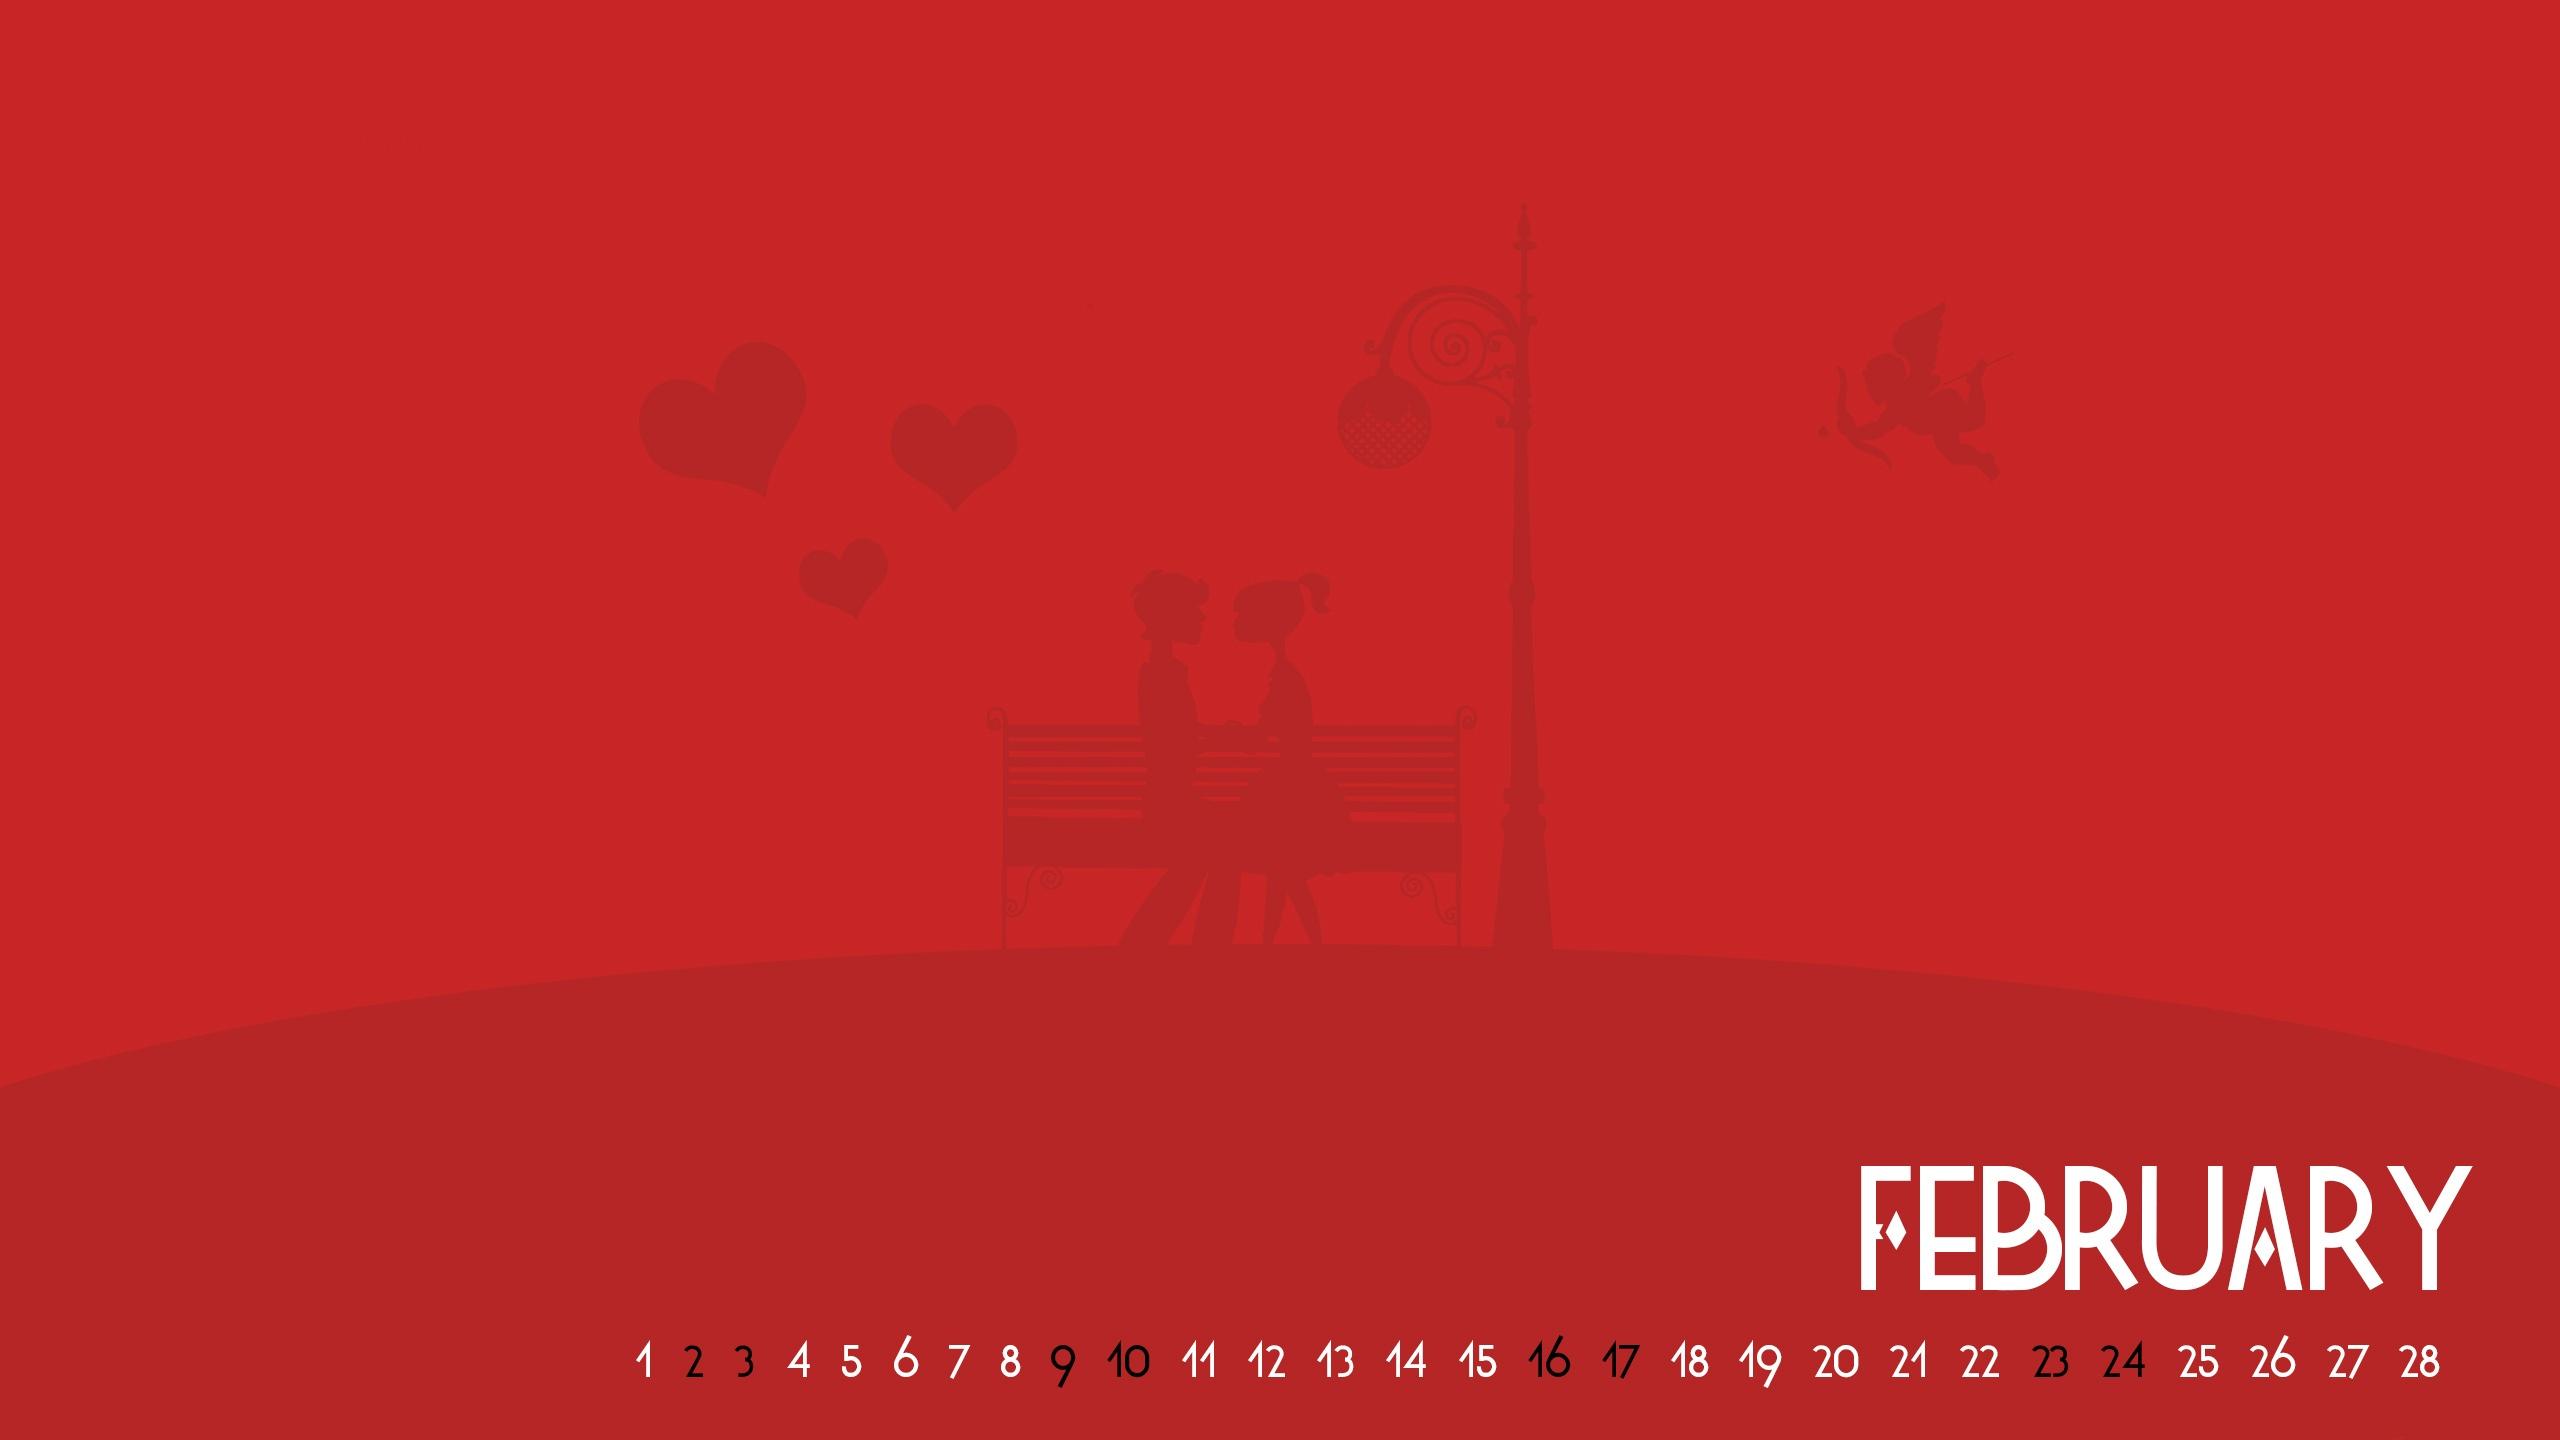 February Valentine Calendar Wallpaper in jpg format for free download